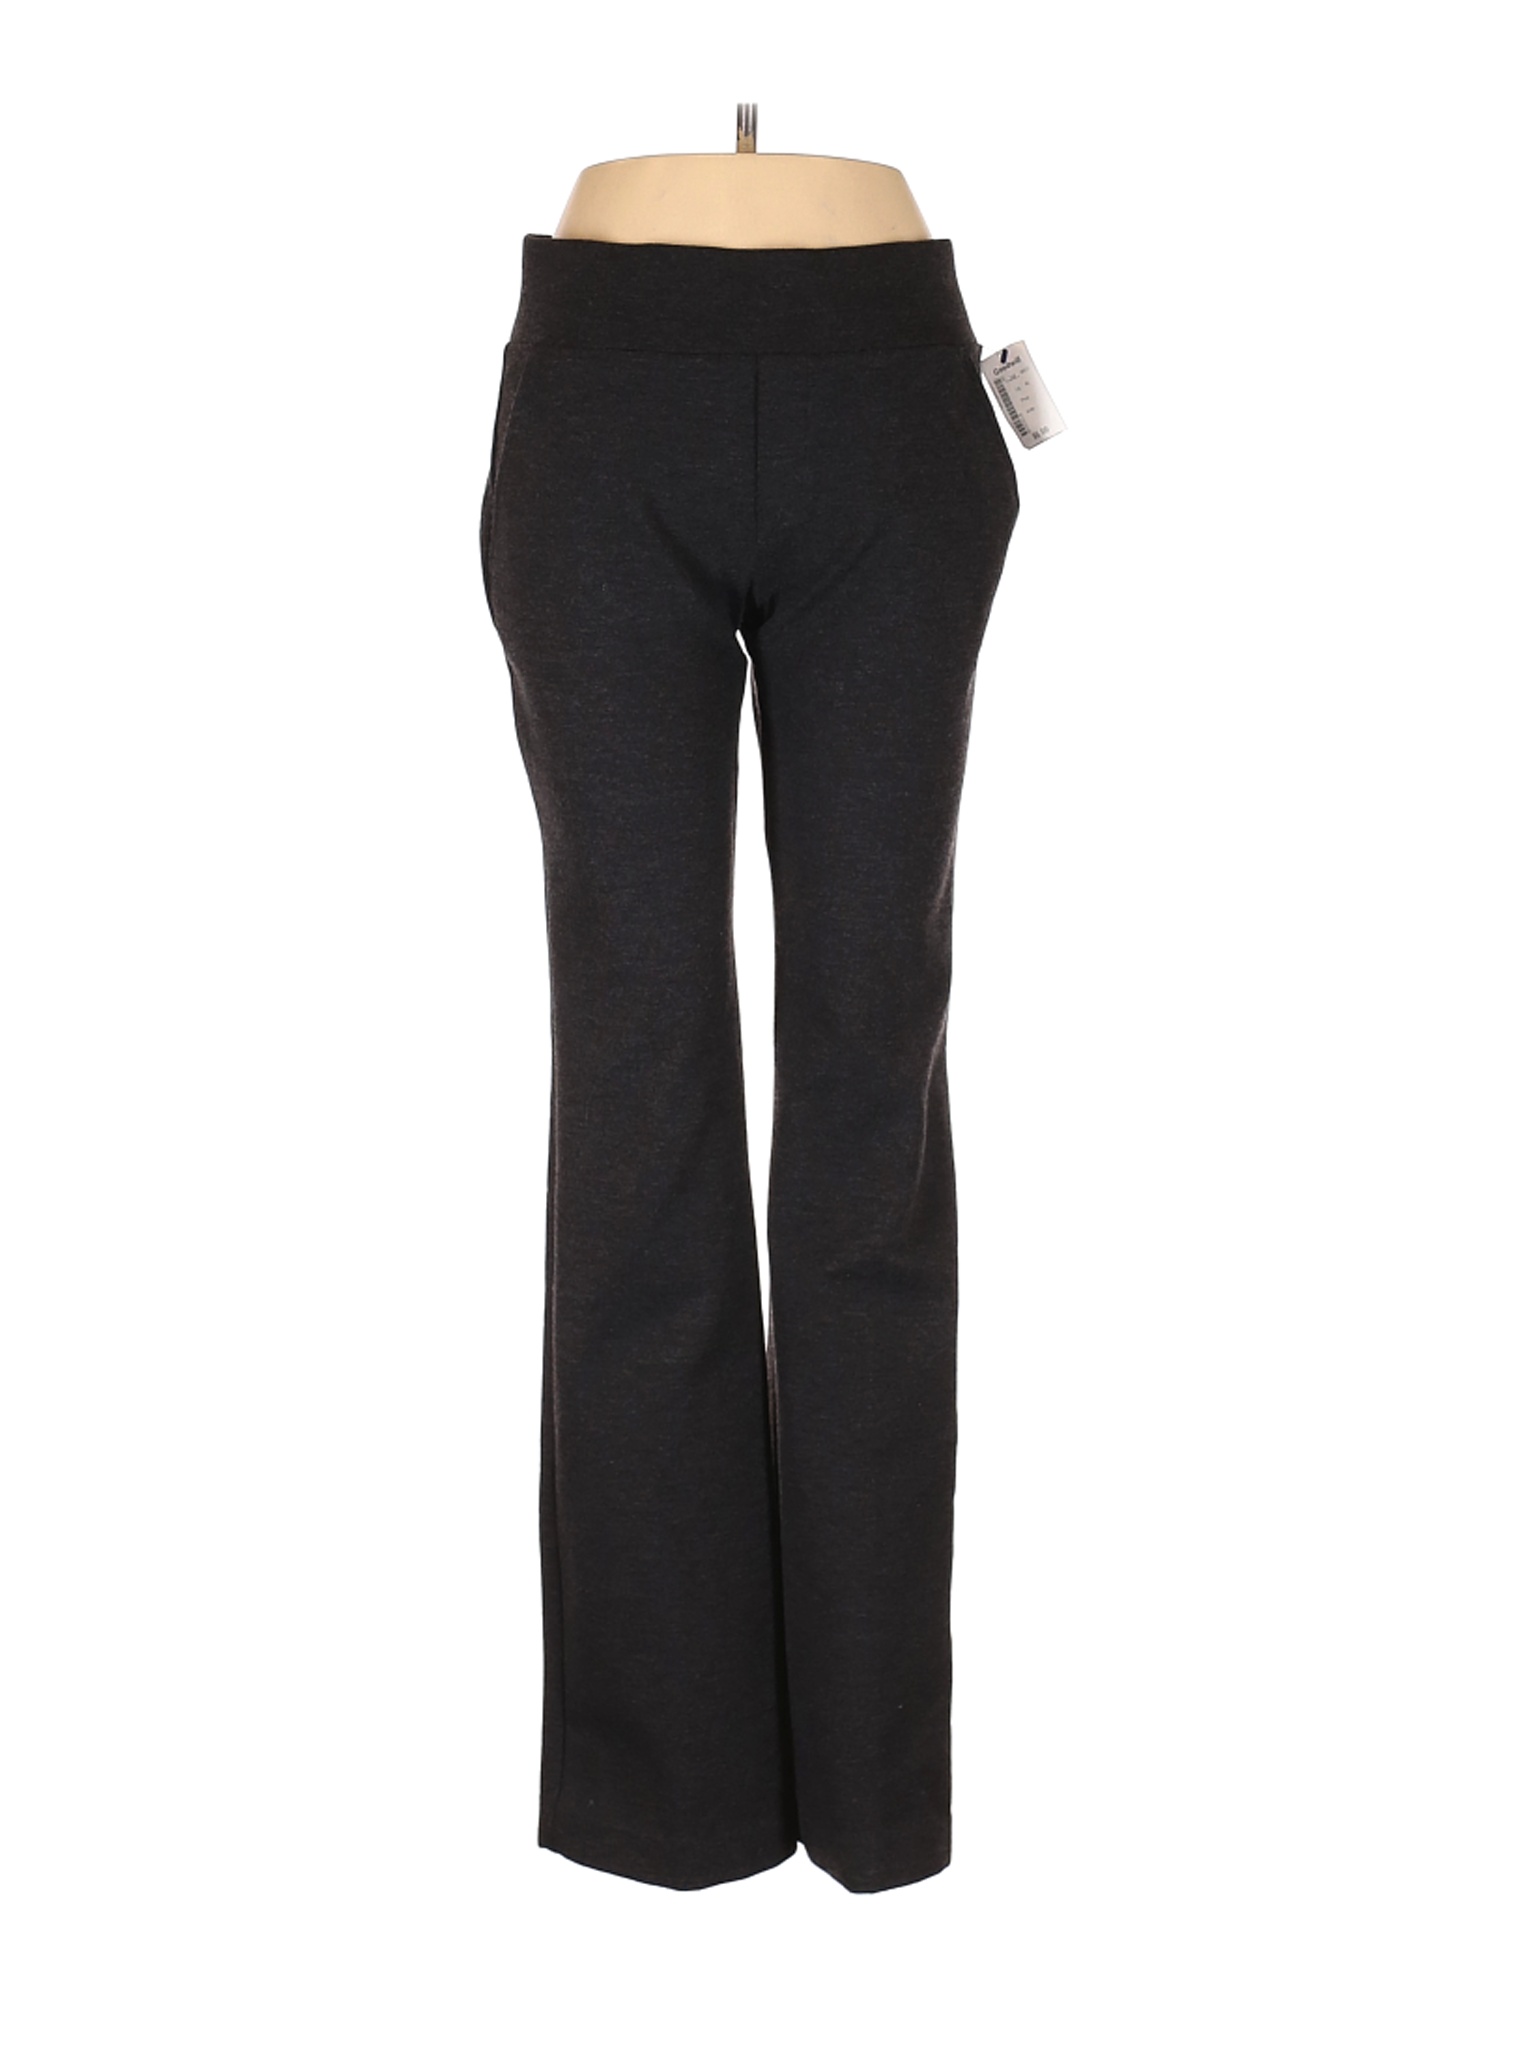 NWT Daisy Fuentes Women Black Casual Pants S | eBay